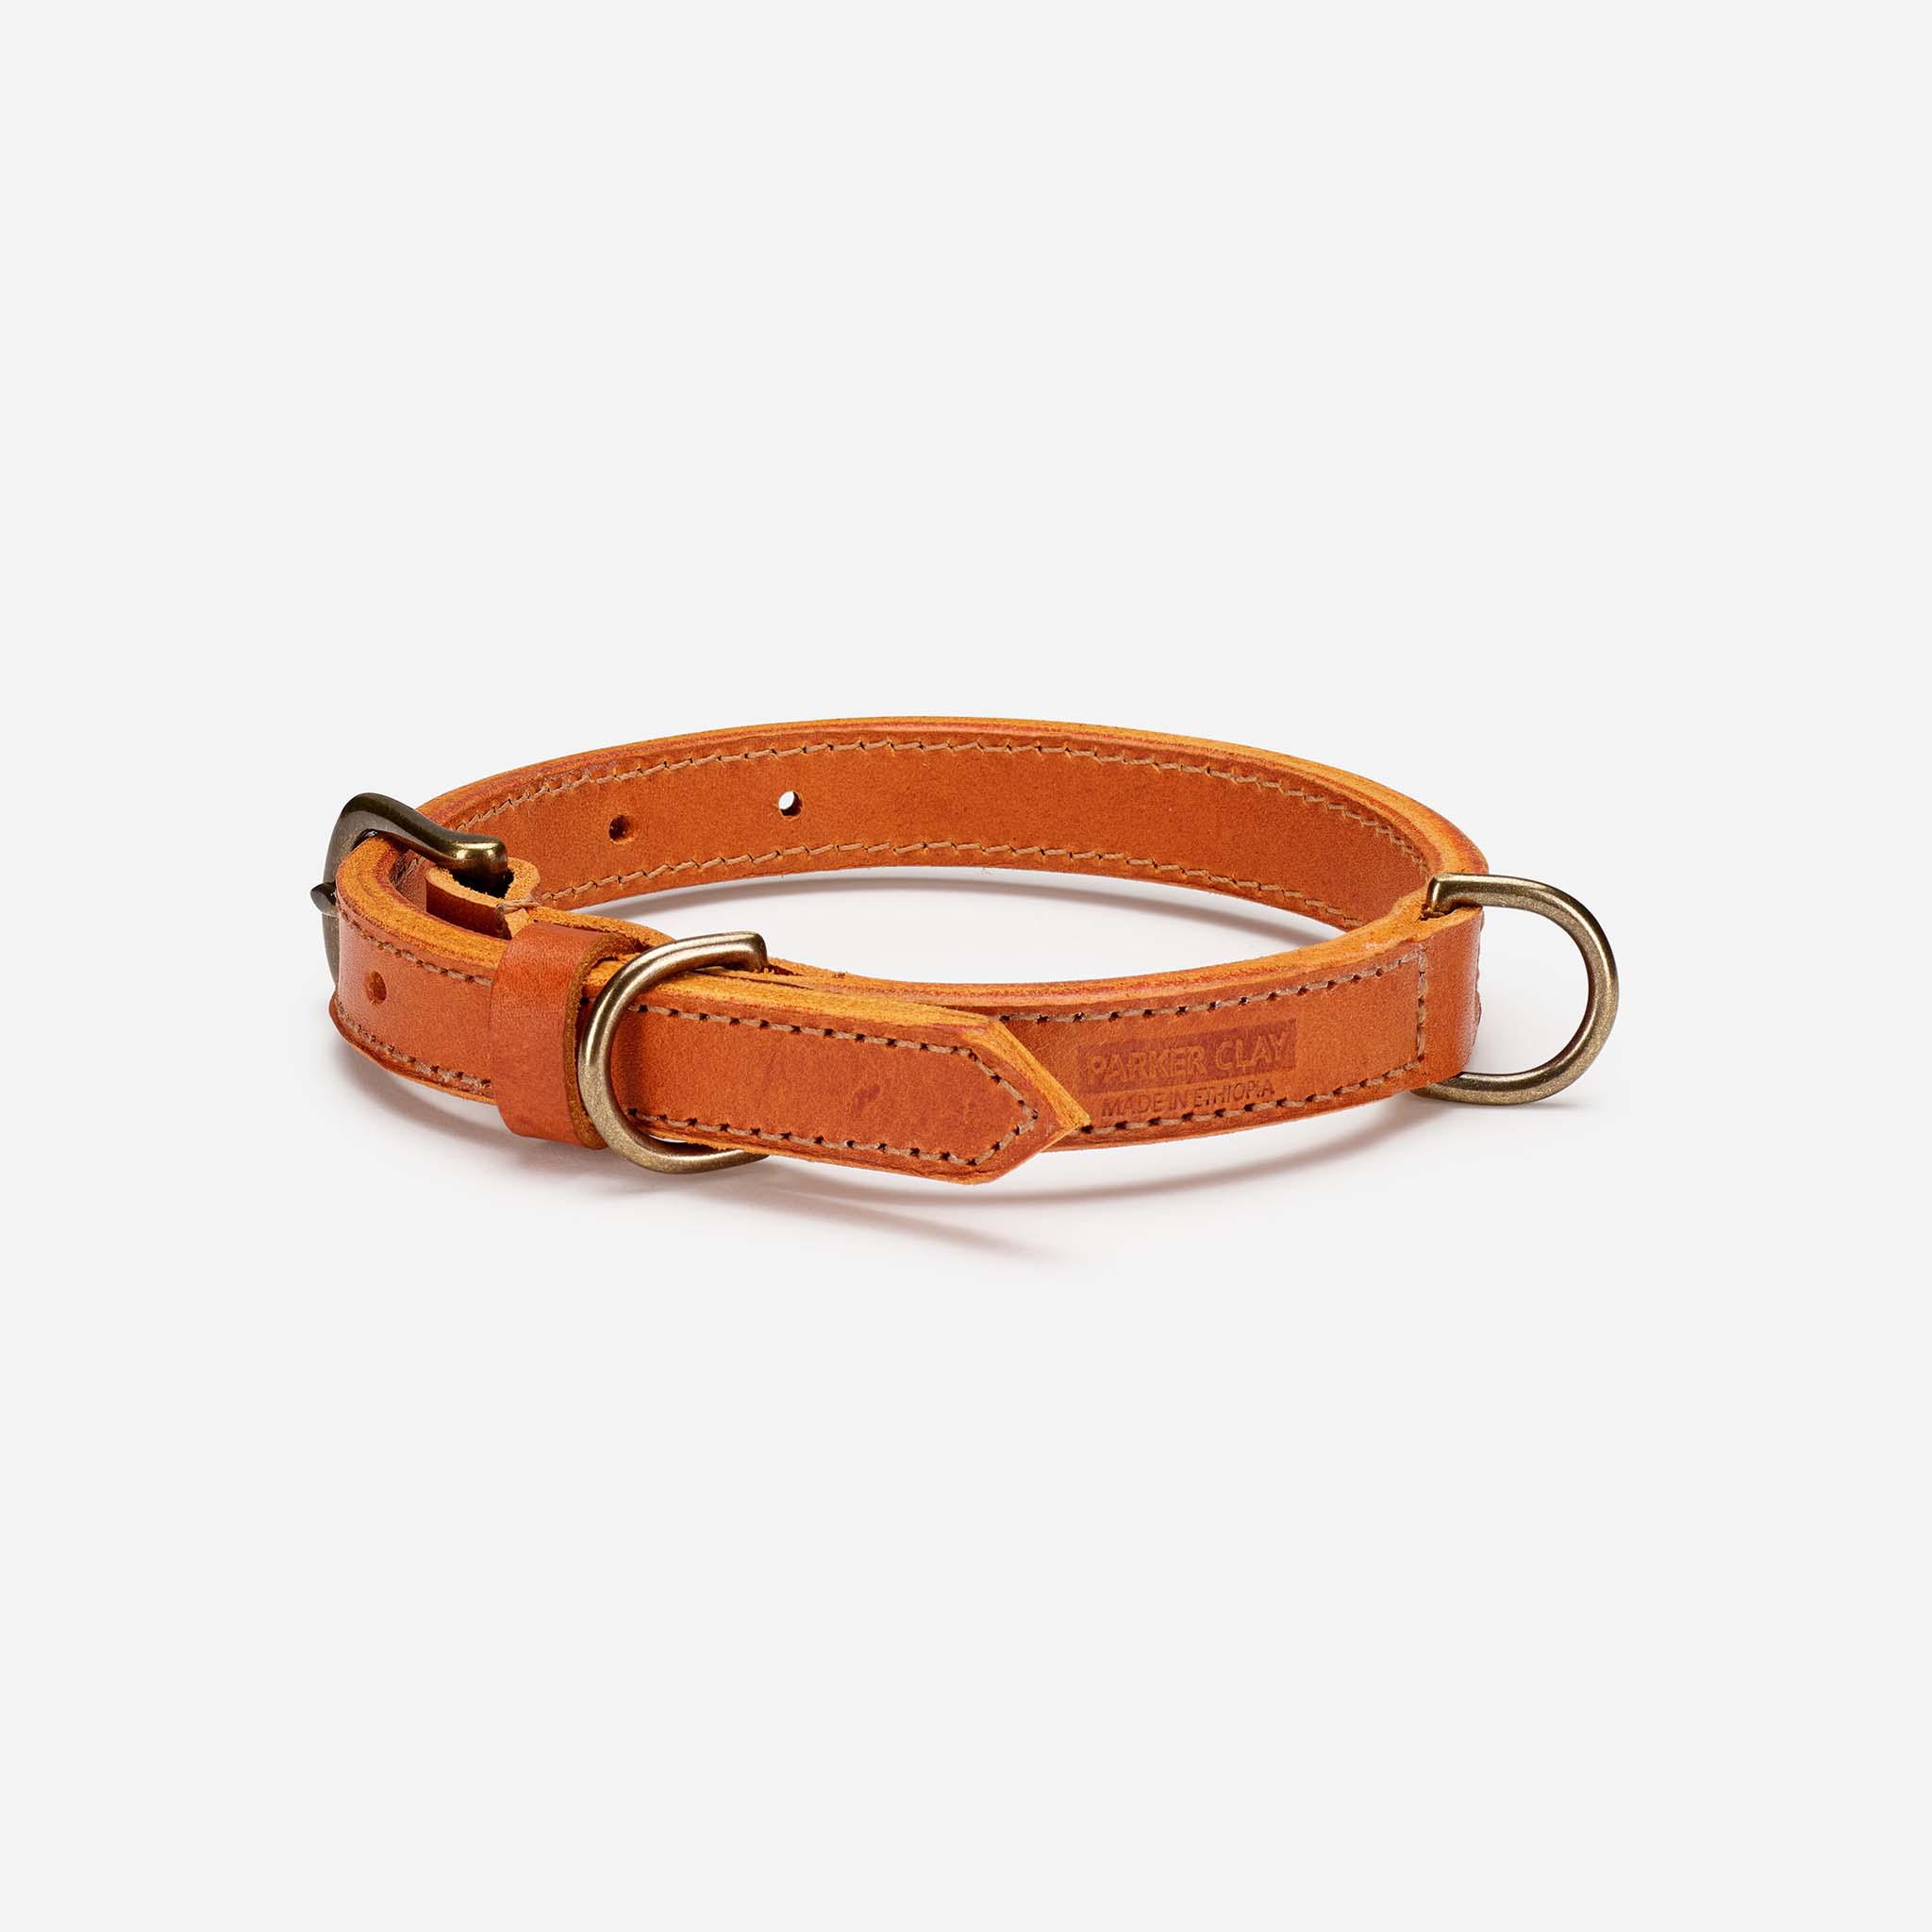 Aspen Dog Collar - Parker Clay 